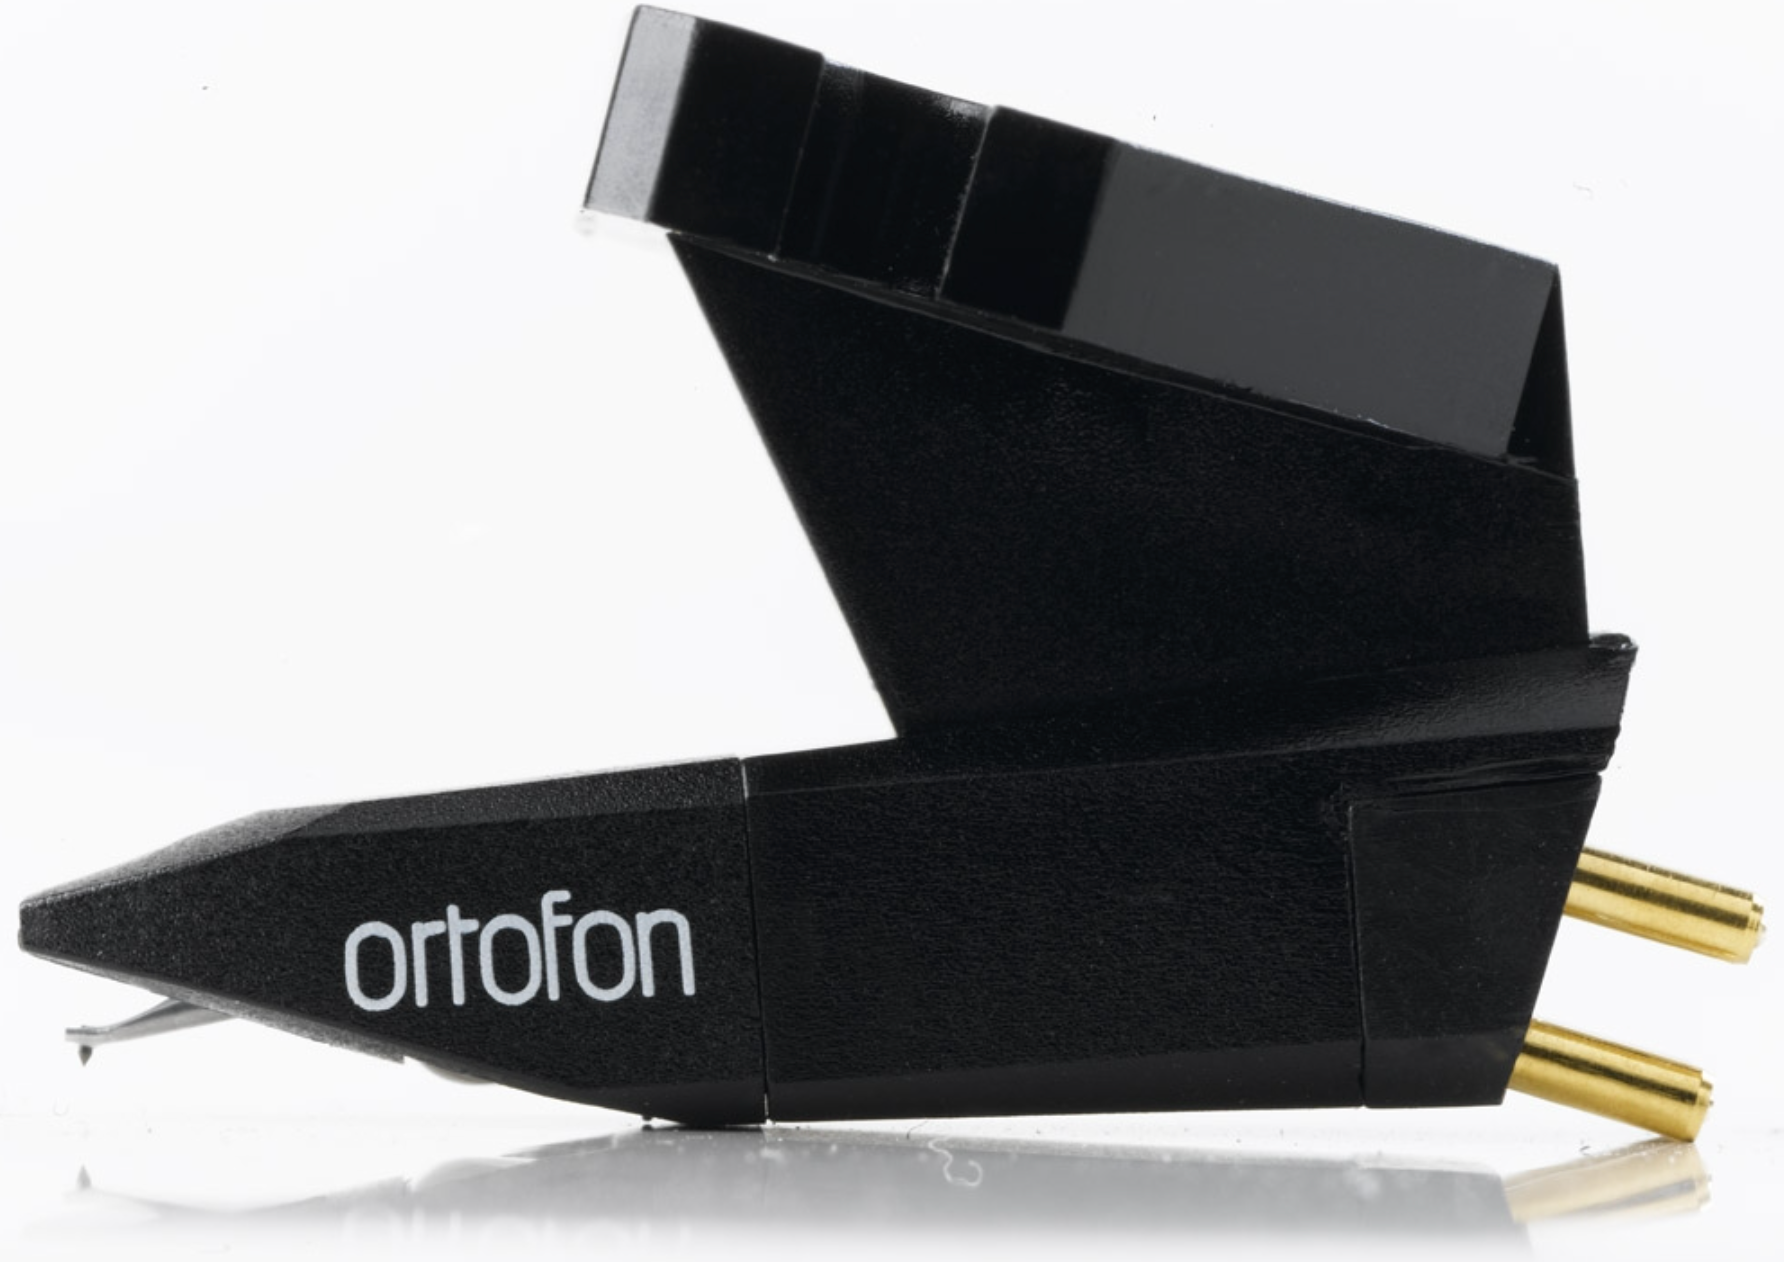 Ortofon Hi-Fi OM 5 E Moving Magnet Cartridge. Left side image